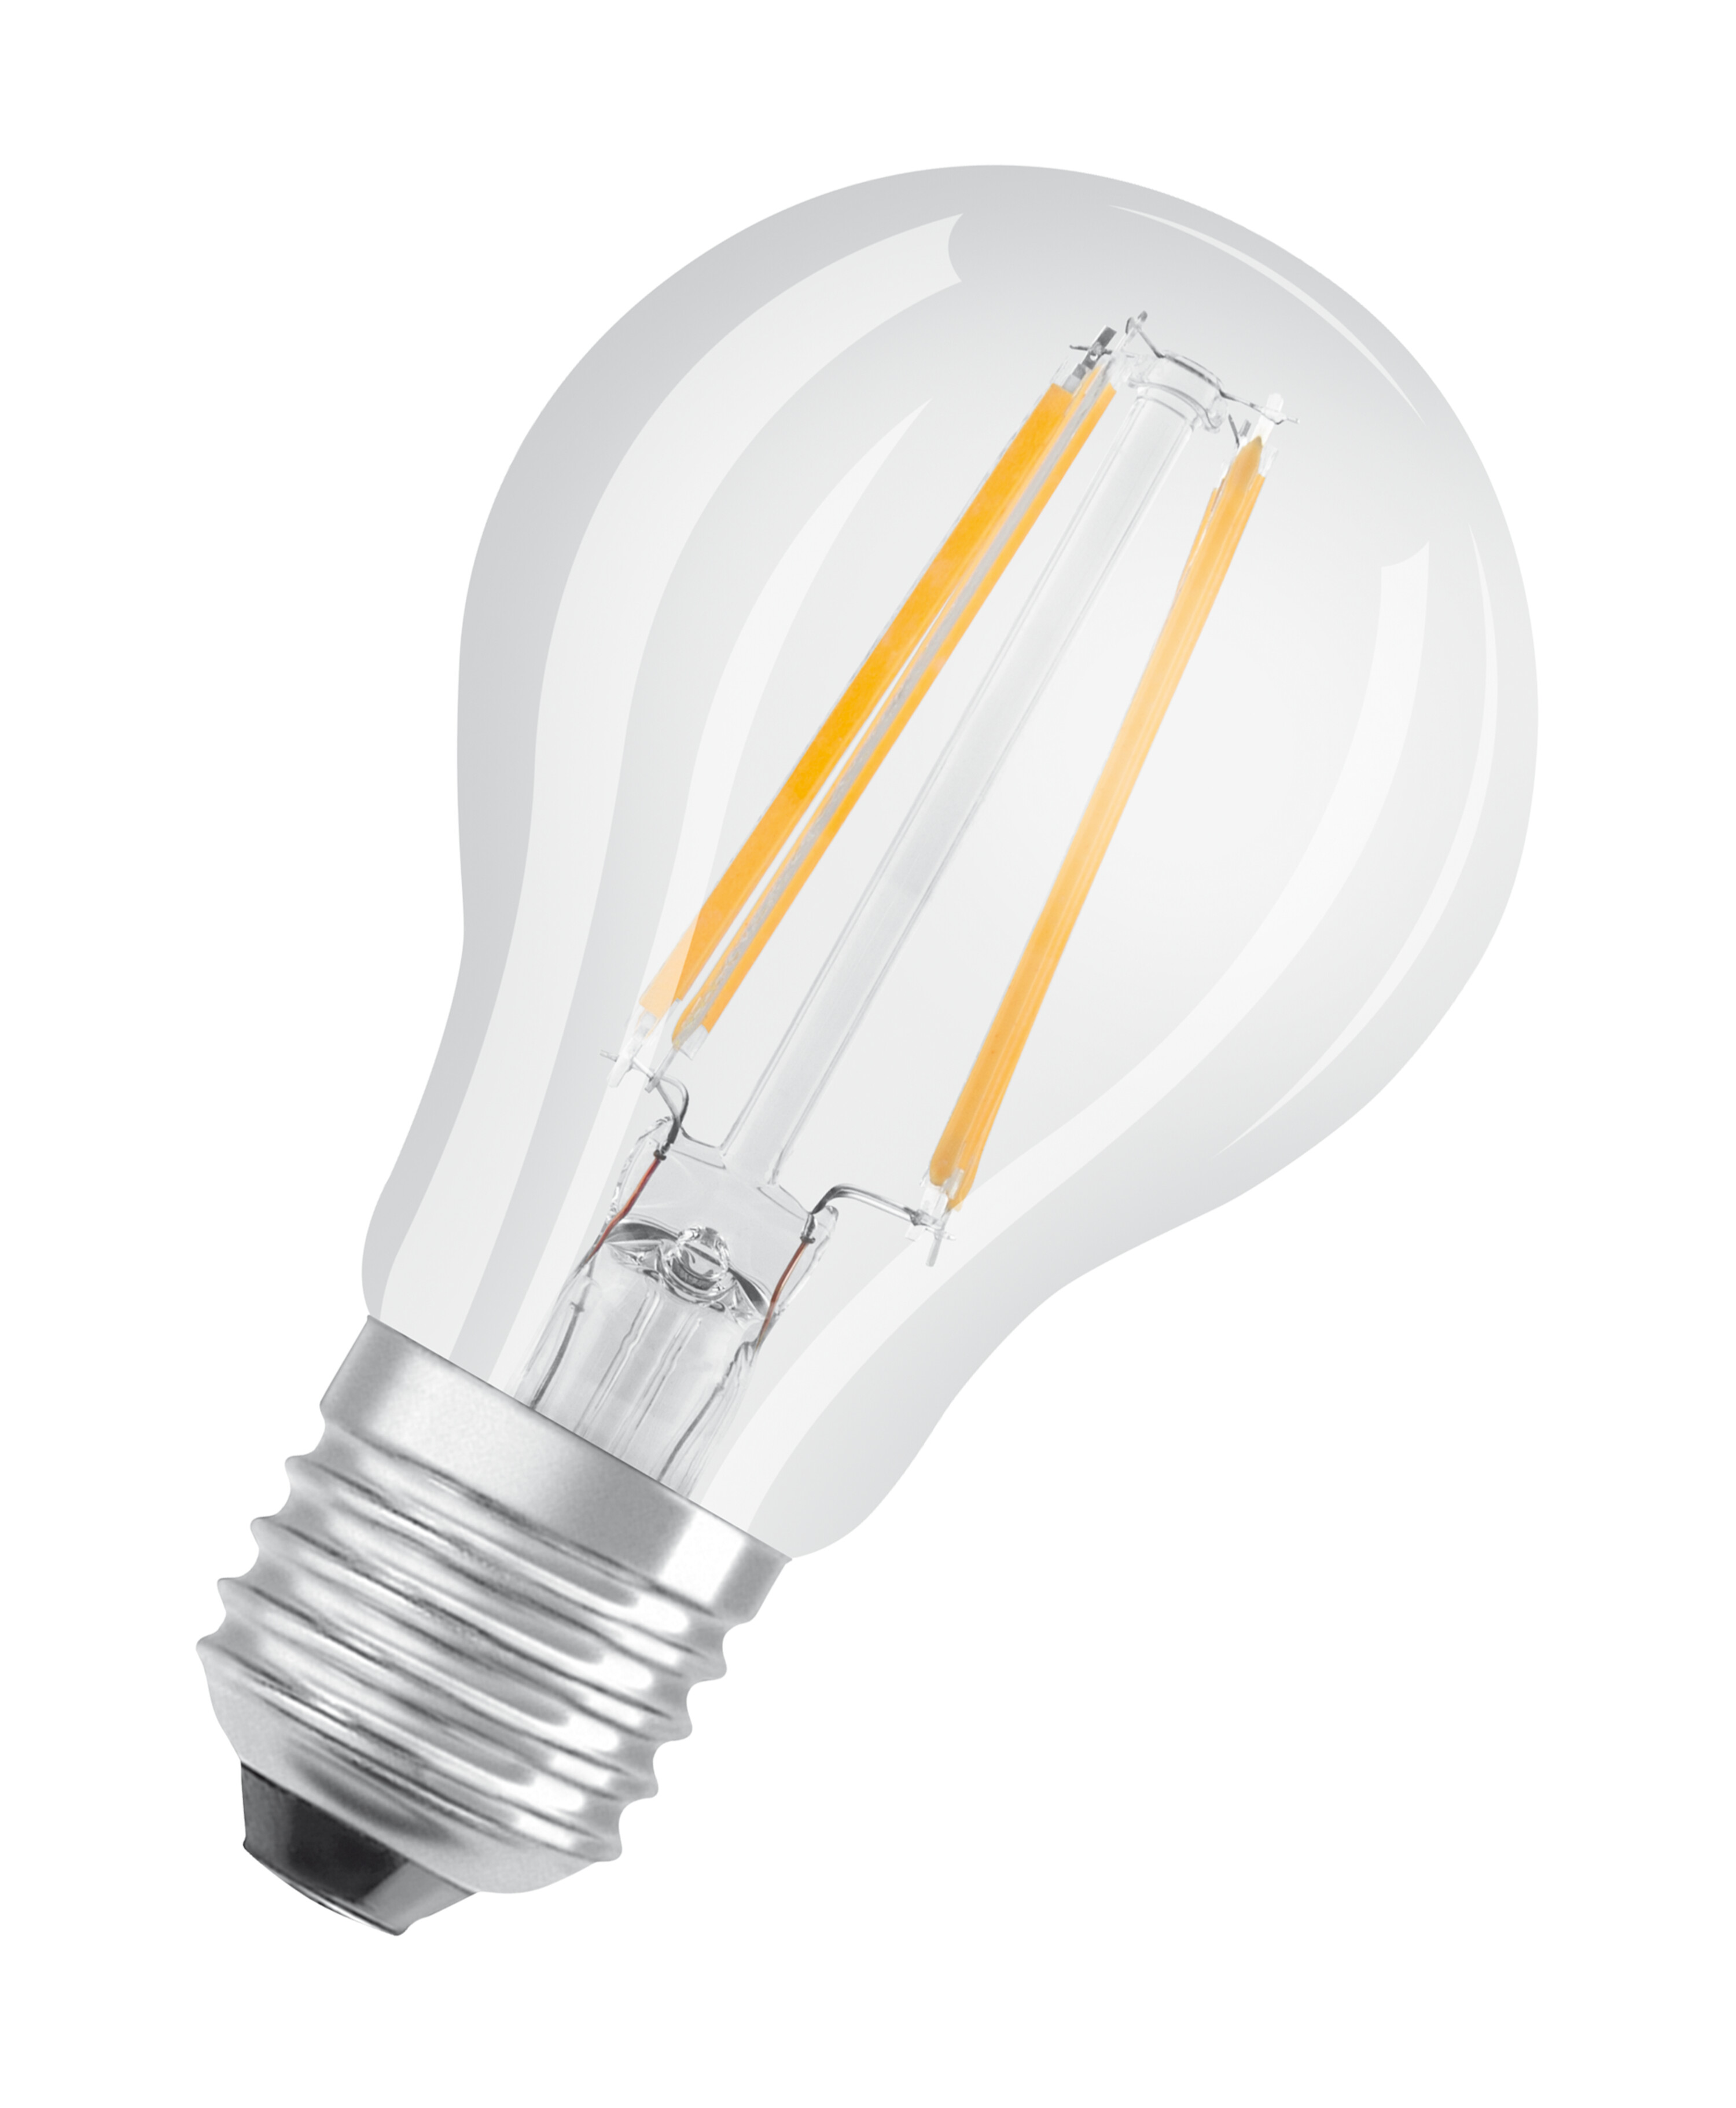 OSRAM  LED Retrofit LED Lumen CLASSIC A 806 Lampe Kaltweiß